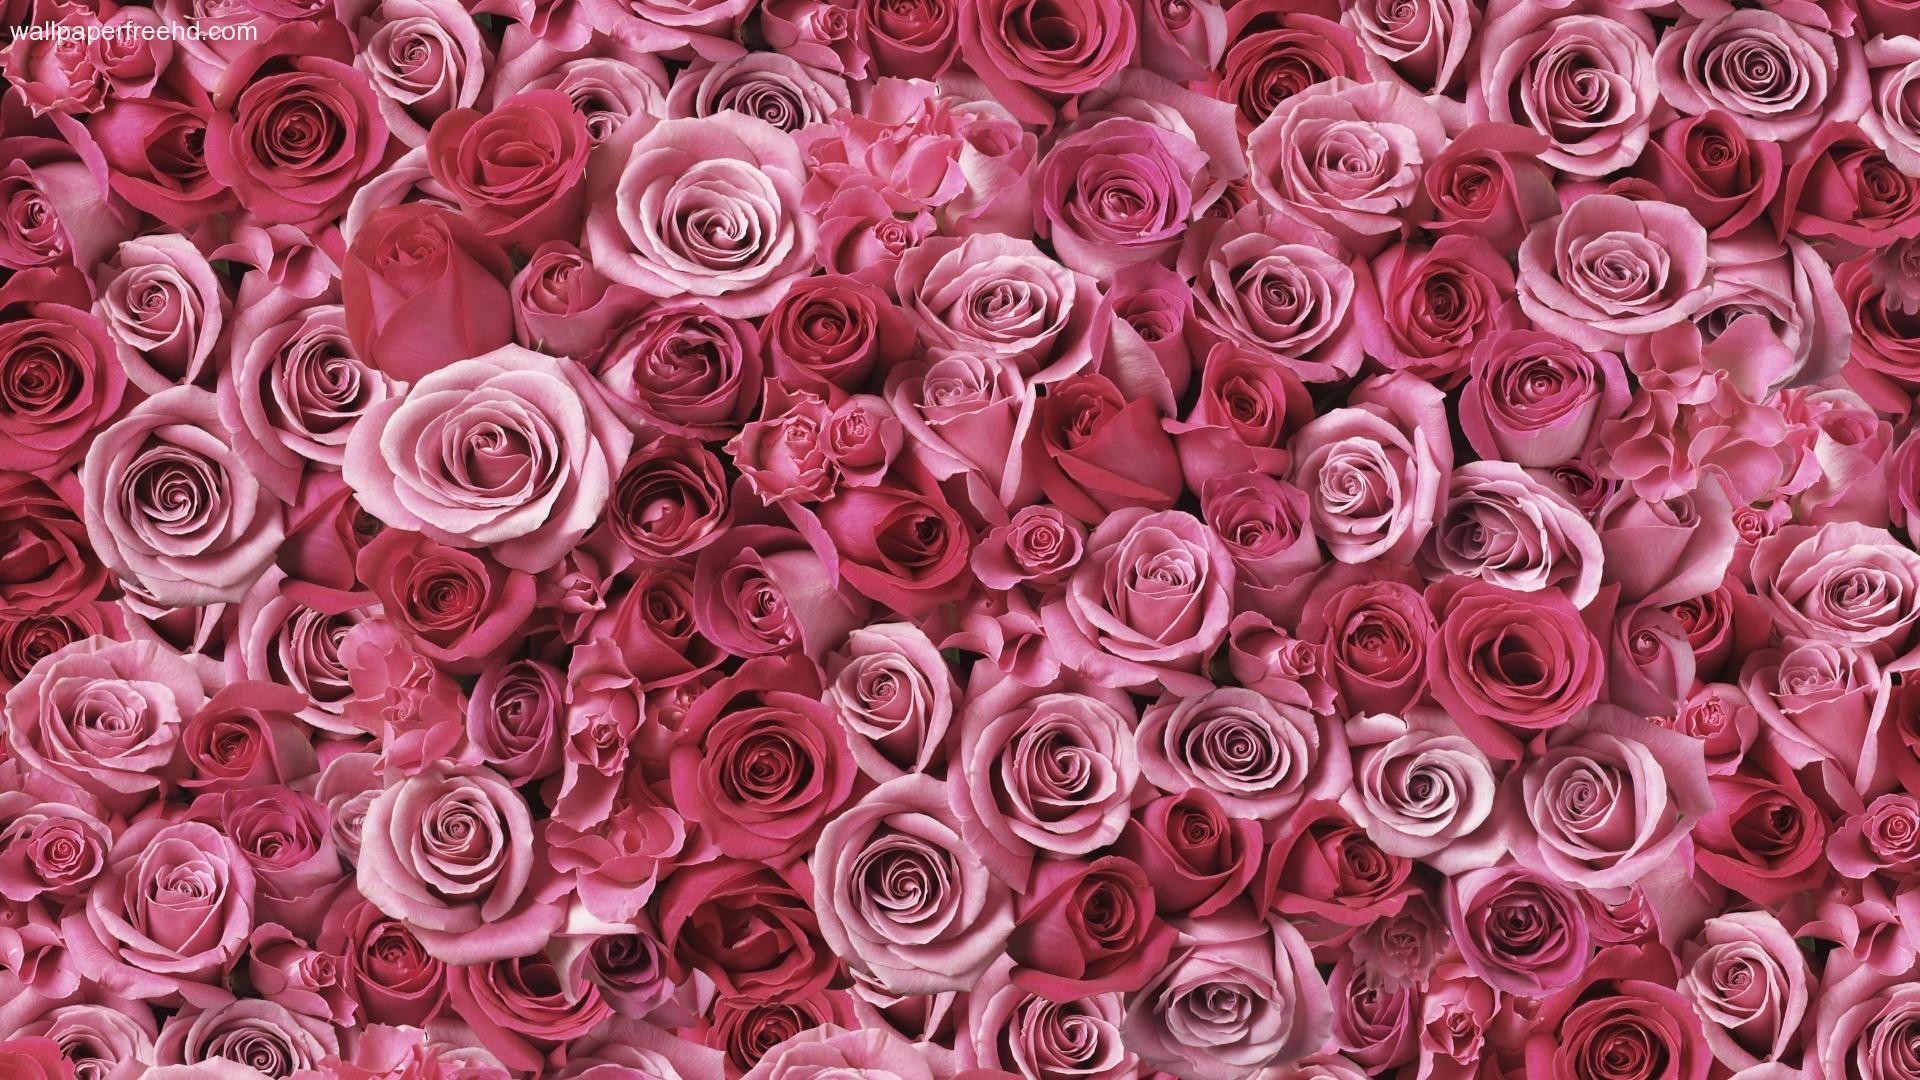 1920x1080 Pink Rose HD Wallpapers - HD Wallpapers Inn